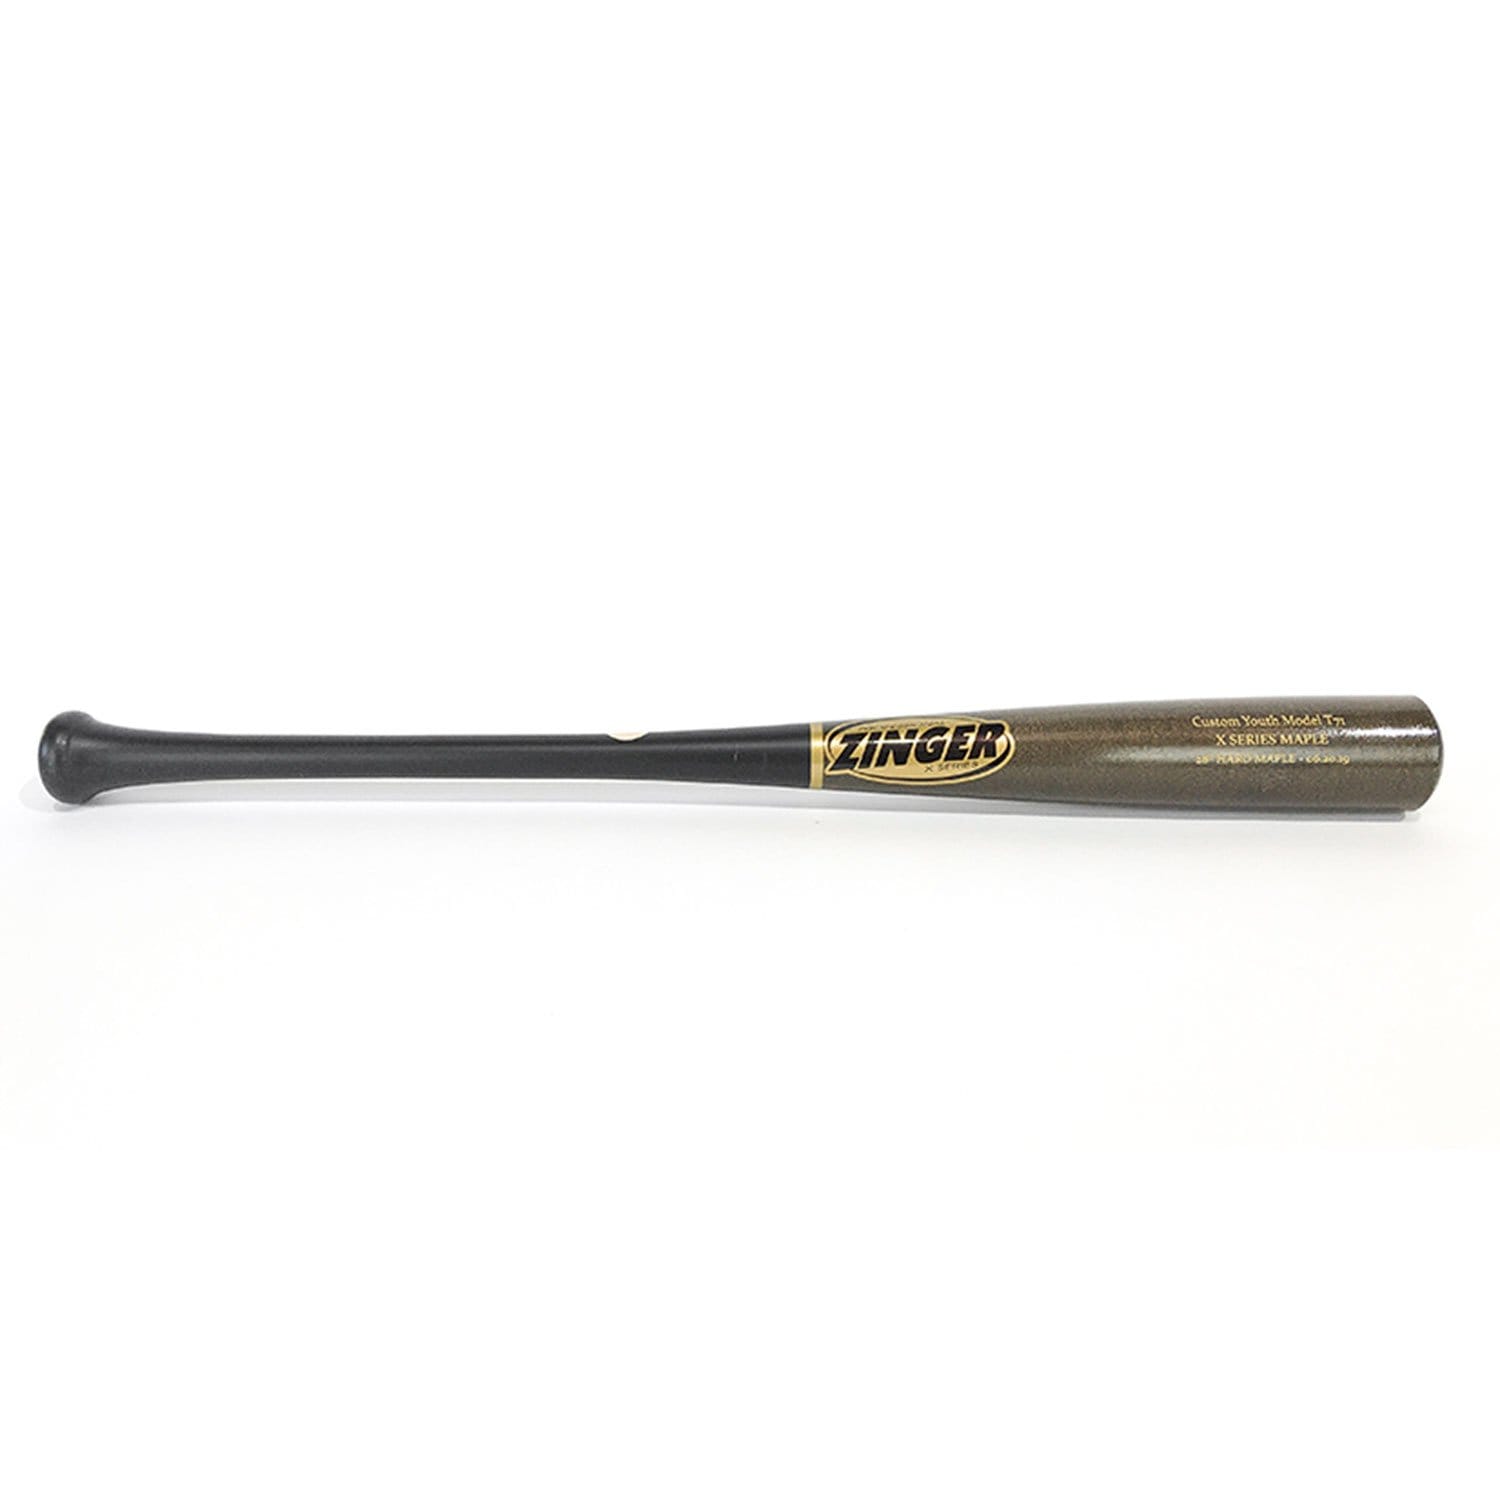 Zinger Bats Youth Model T71 Wood Bat | Maple | 29